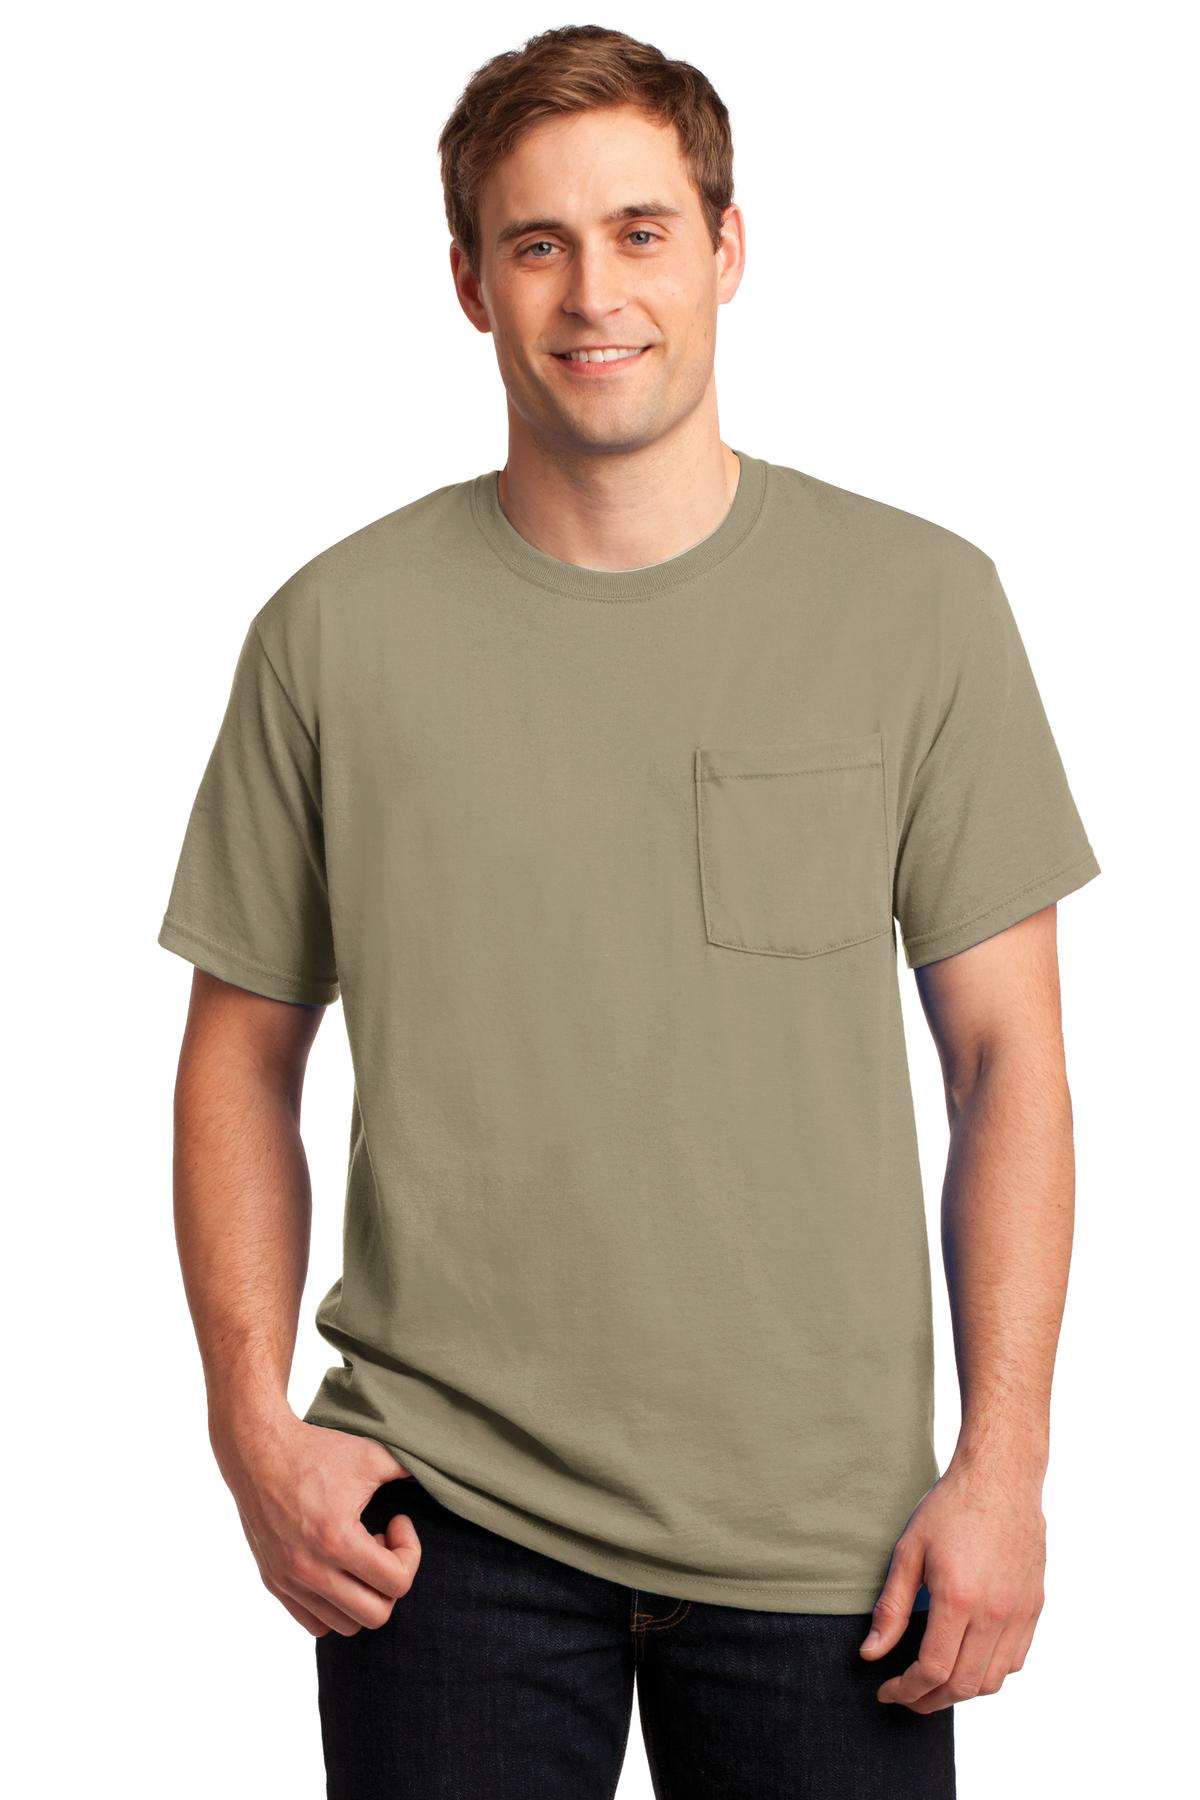 JERZEES® - Dri-Power® 50/50 Cotton/Poly Pocket T-Shirt. 29MP [Khaki] - DFW Impression